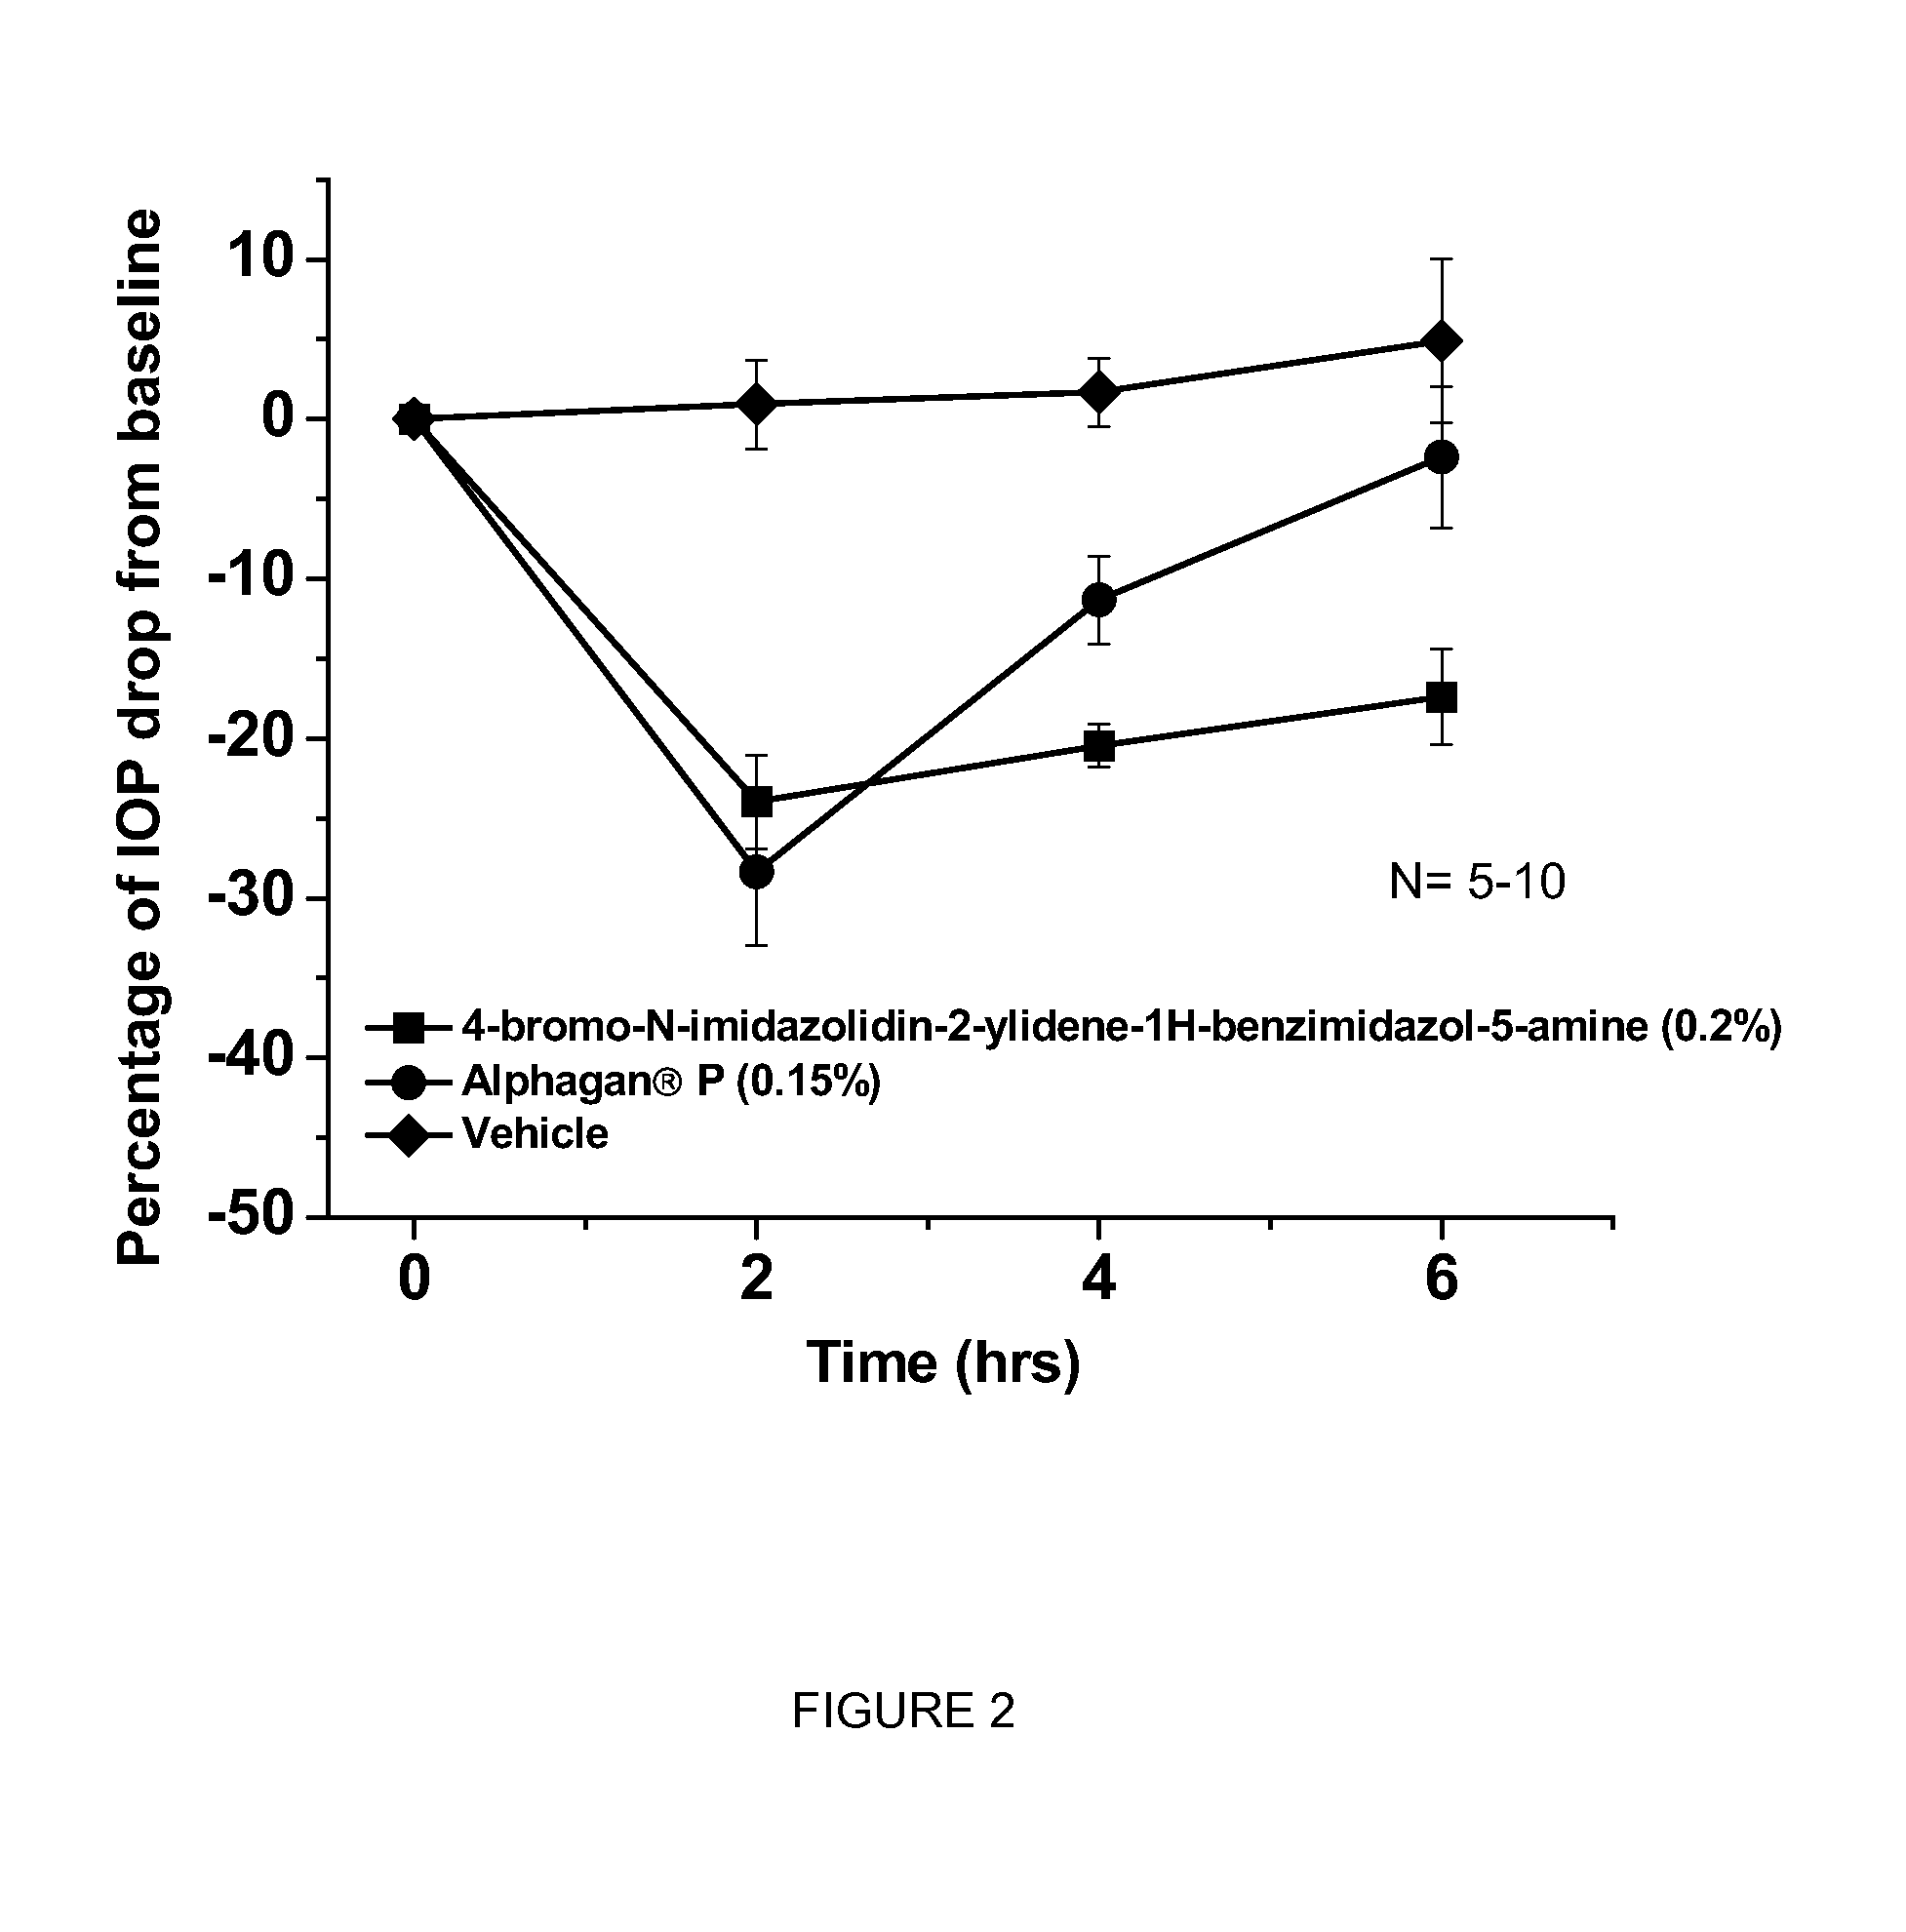 Alpha-2 adrenergic agonist having long duration of intraocular pressure-lowering effect